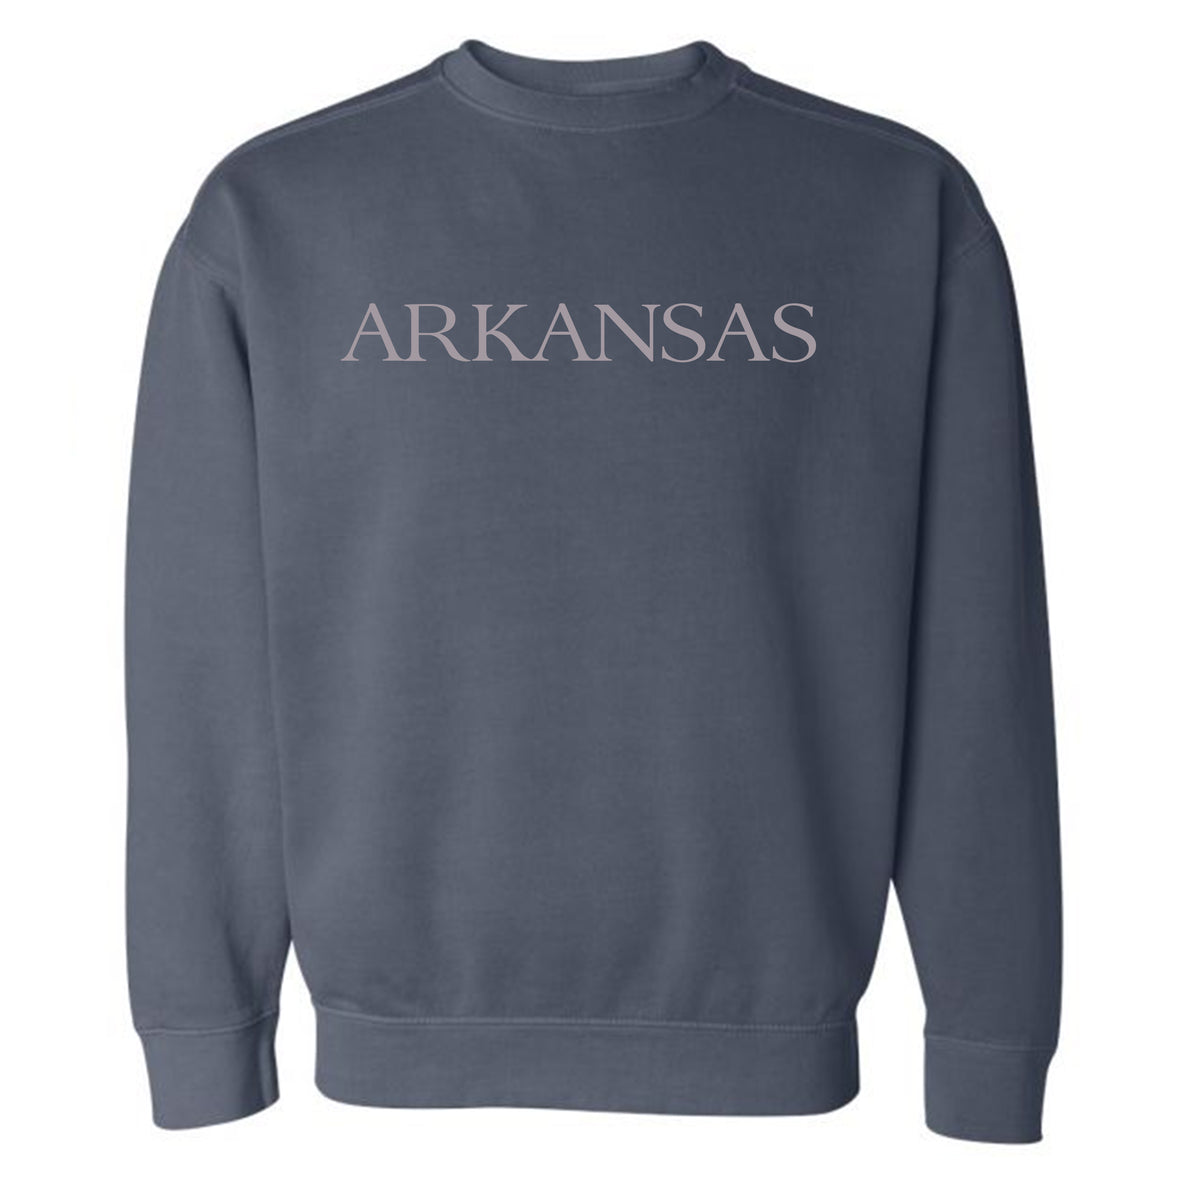 By the sea Arkansas Navy Sweatshirt